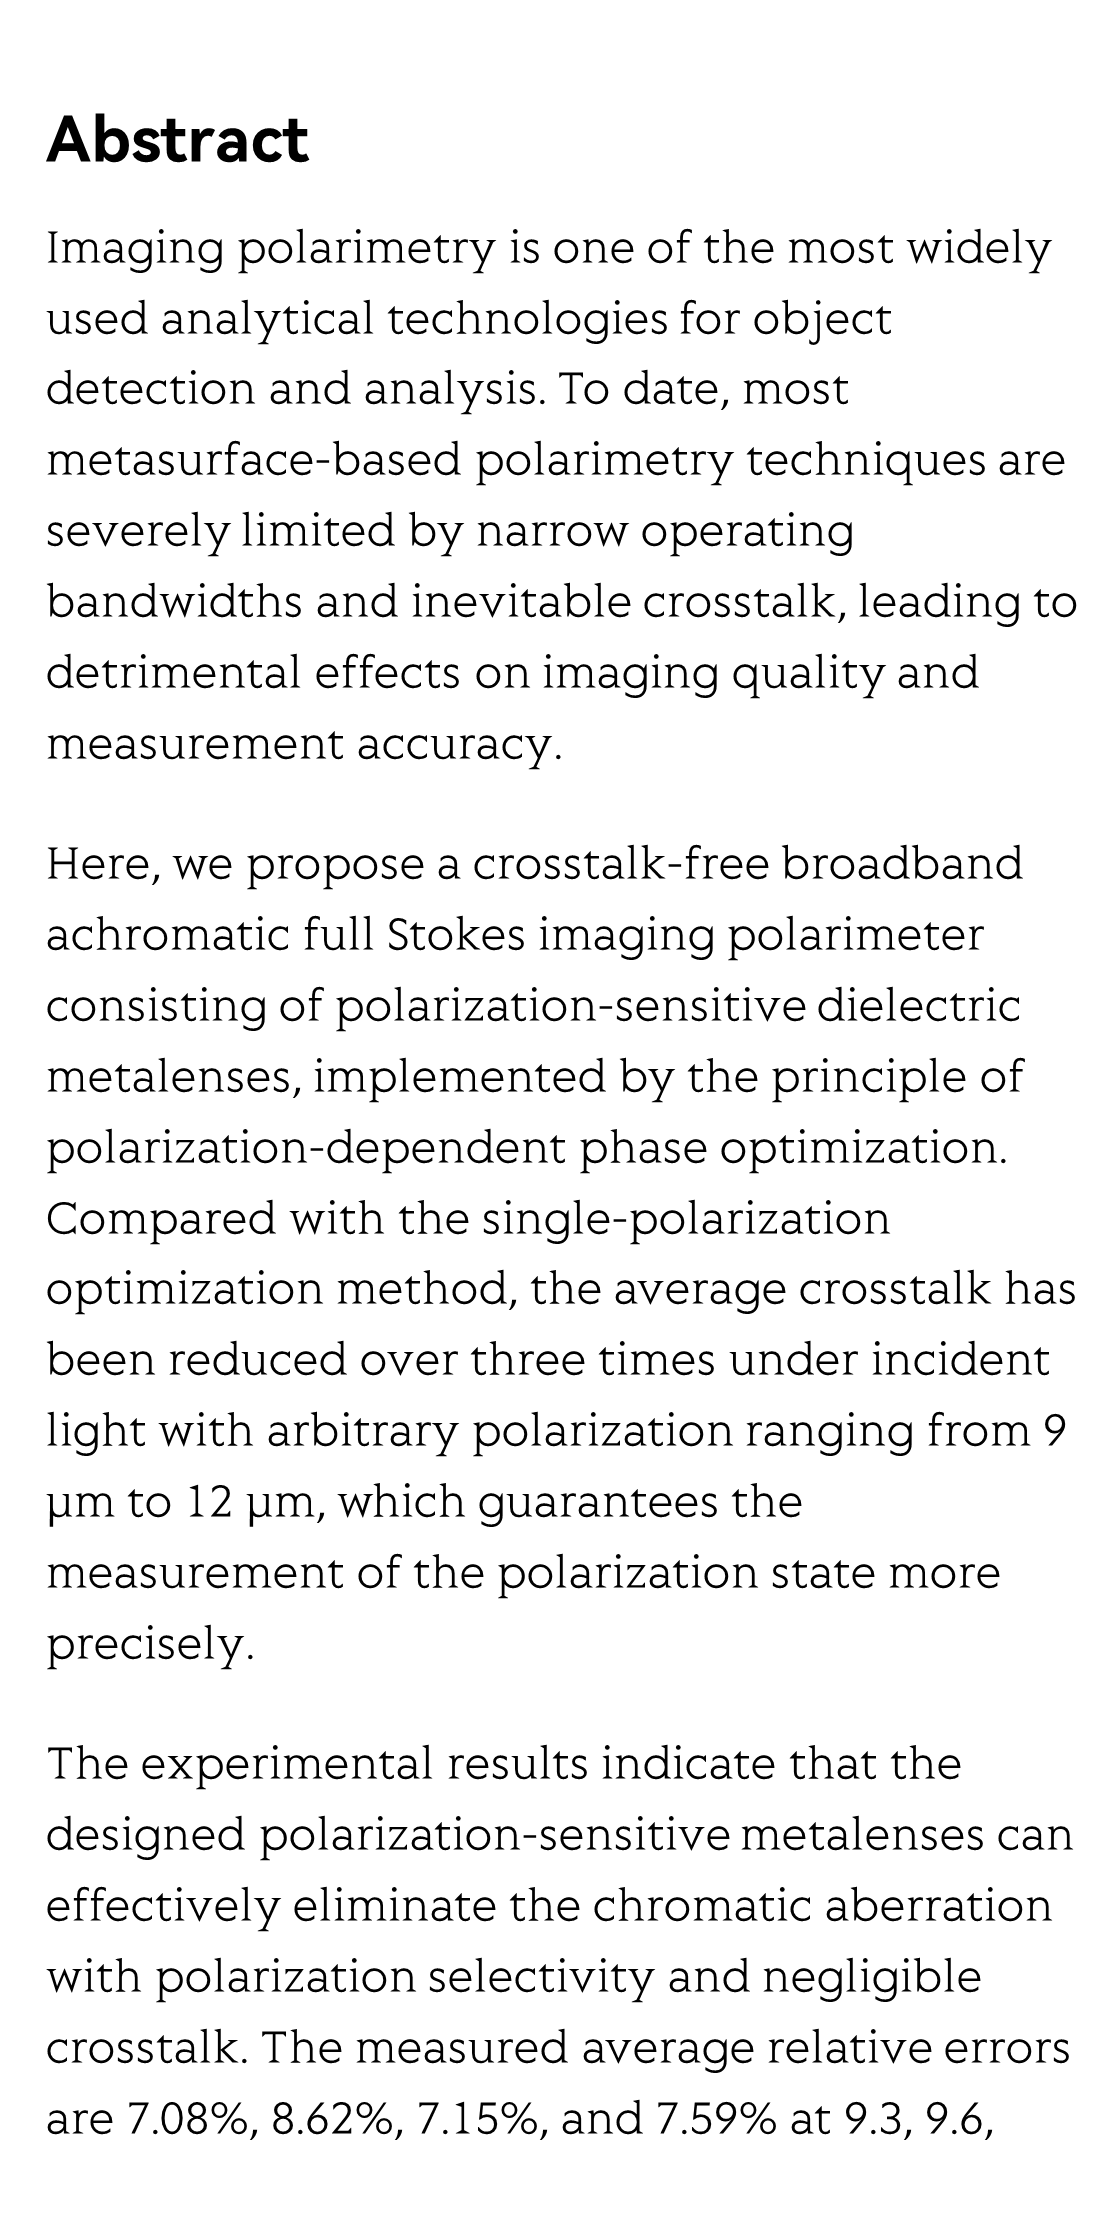 Crosstalk-free achromatic full Stokes imaging polarimetry metasurface enabled by polarization-dependent phase optimization_2